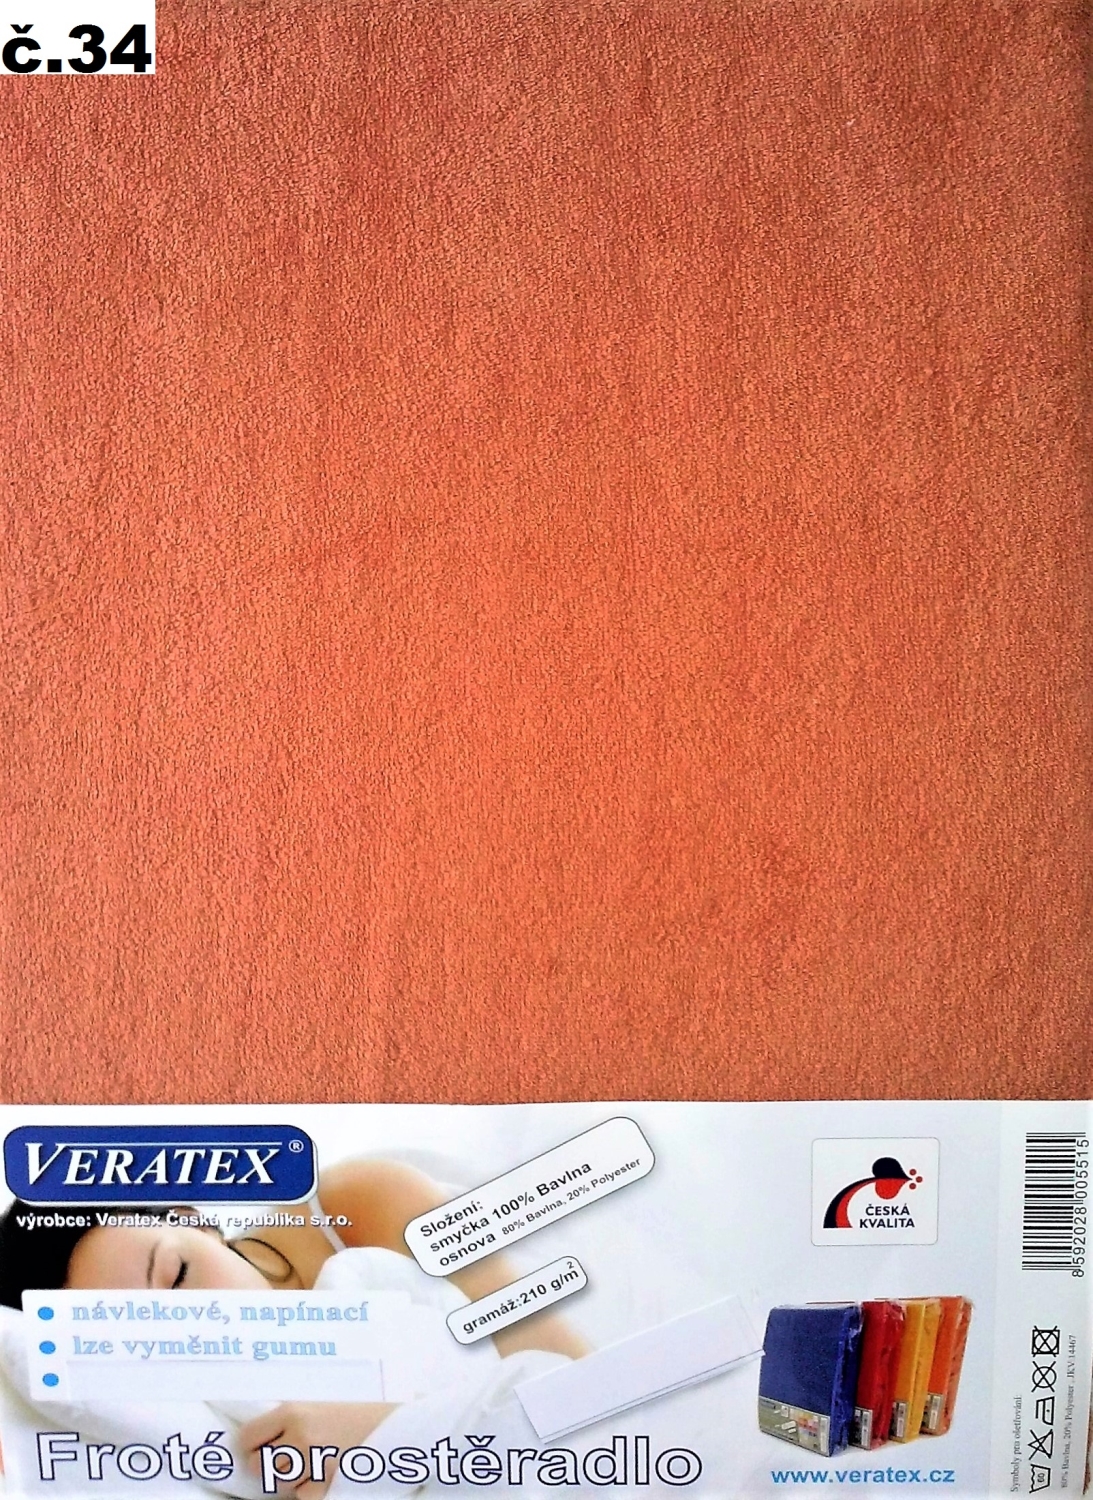 Veratex Froté prostěradlo 130x200/16 cm (č.34-sv.rezavá)